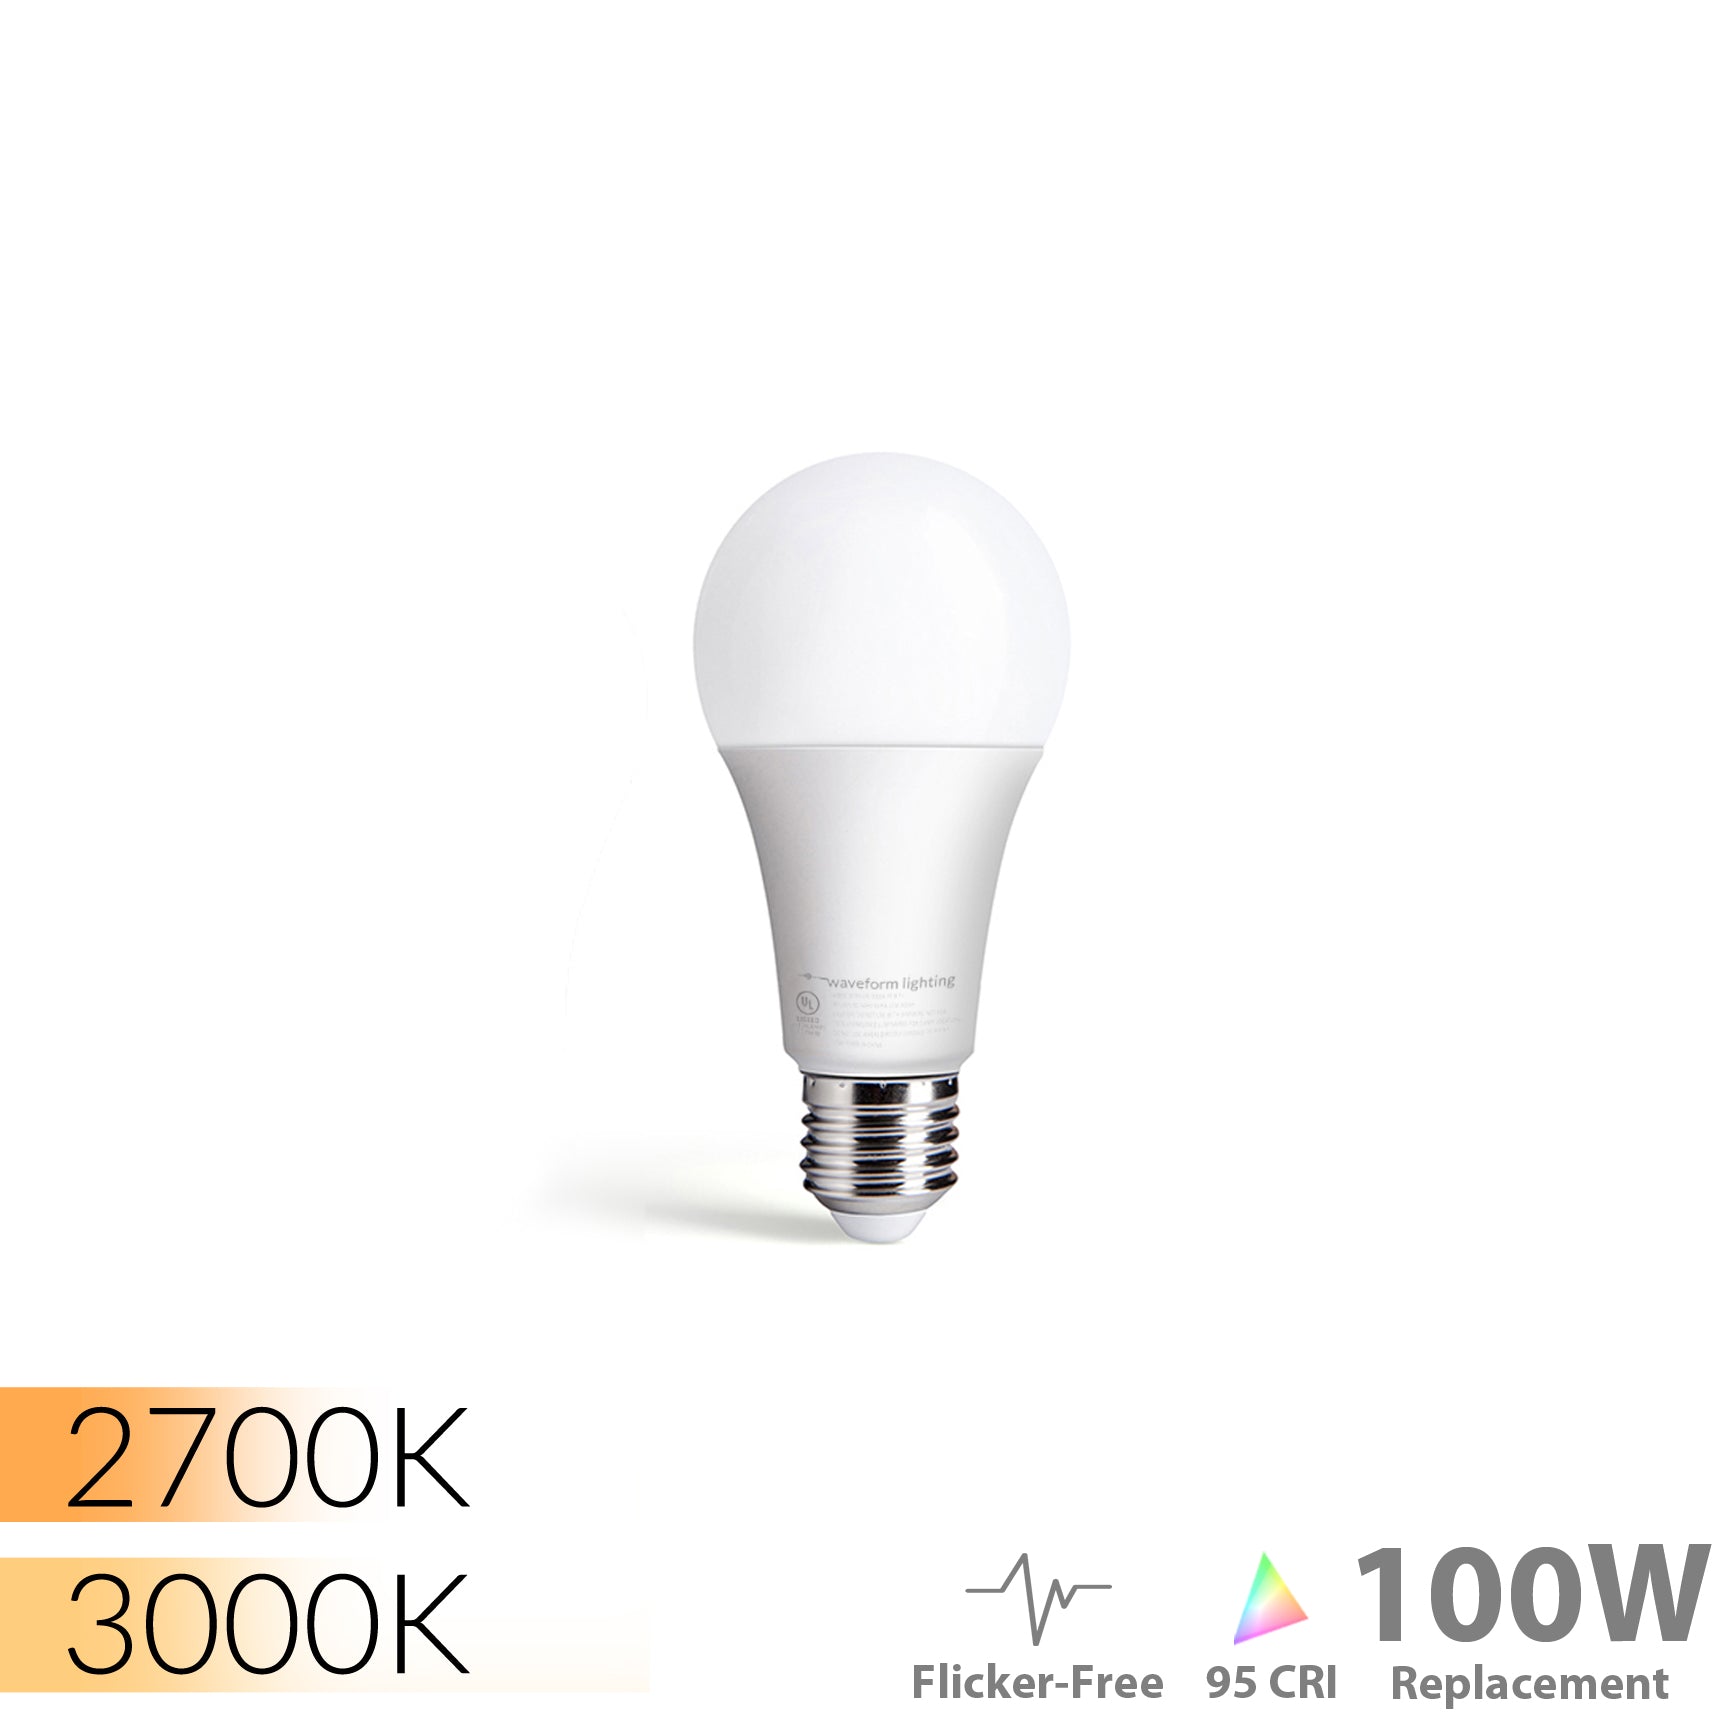 A21 - E26 smart bulb - 100 W